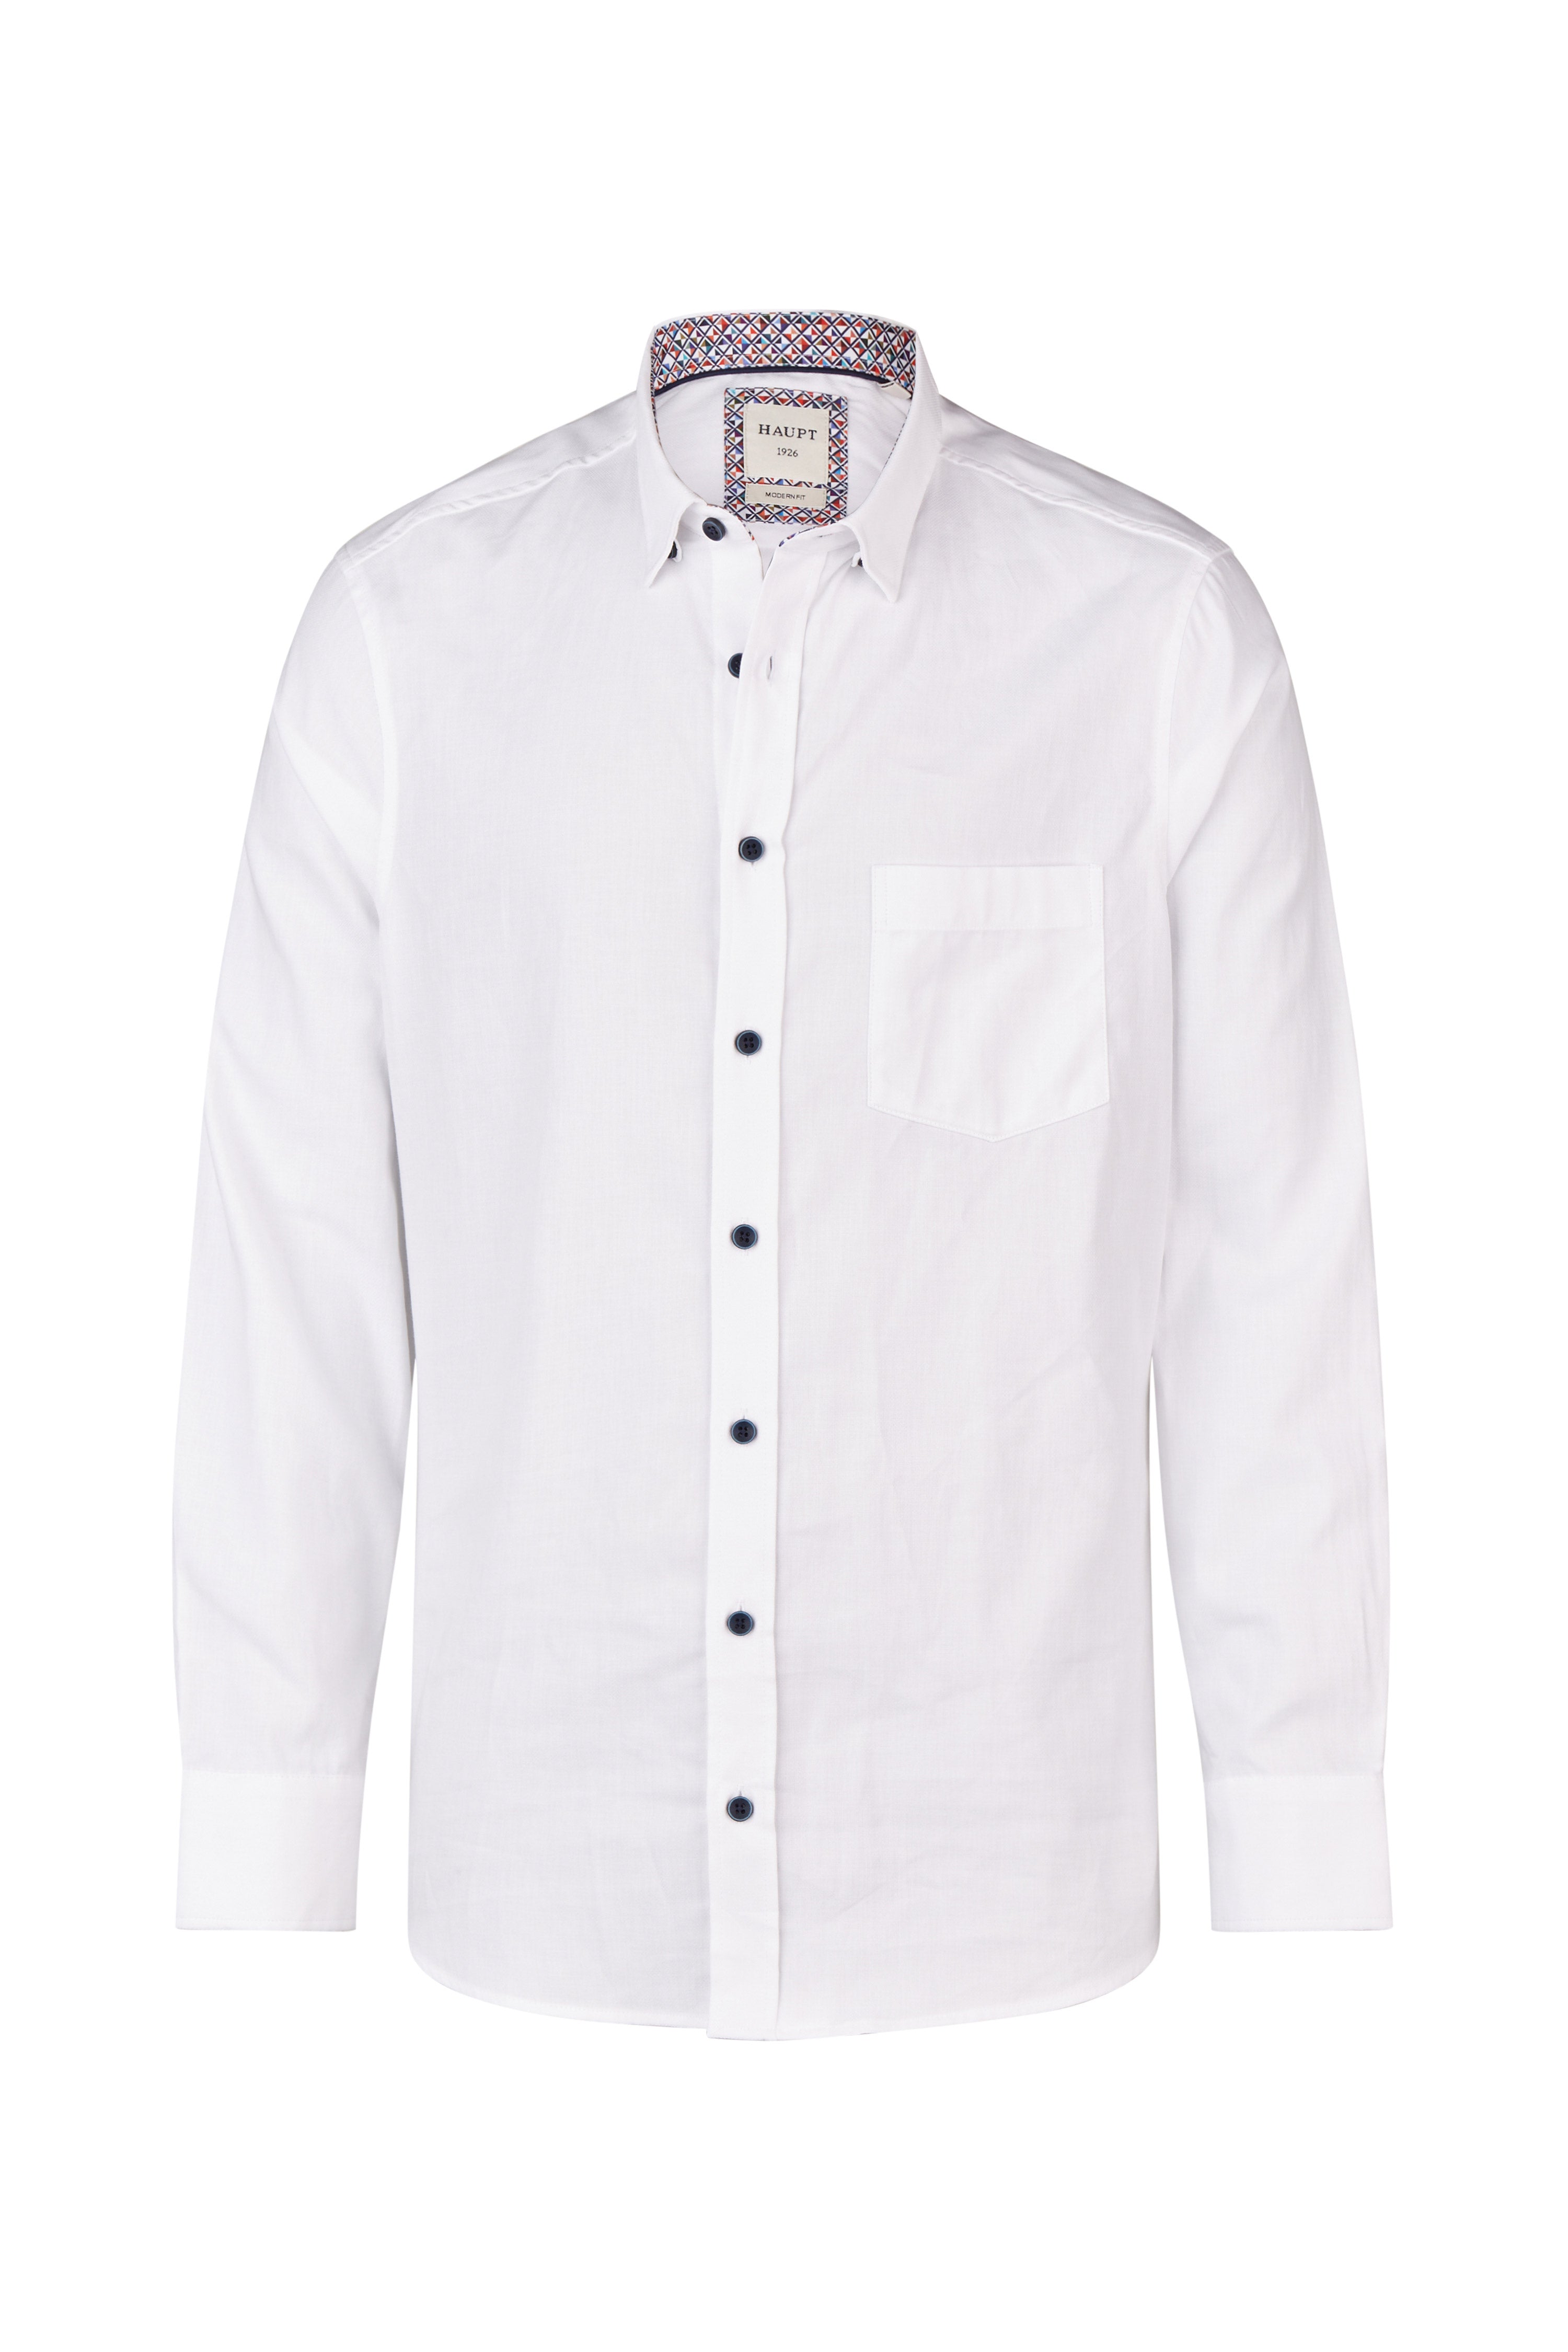 Cotton men's shirt WHITE